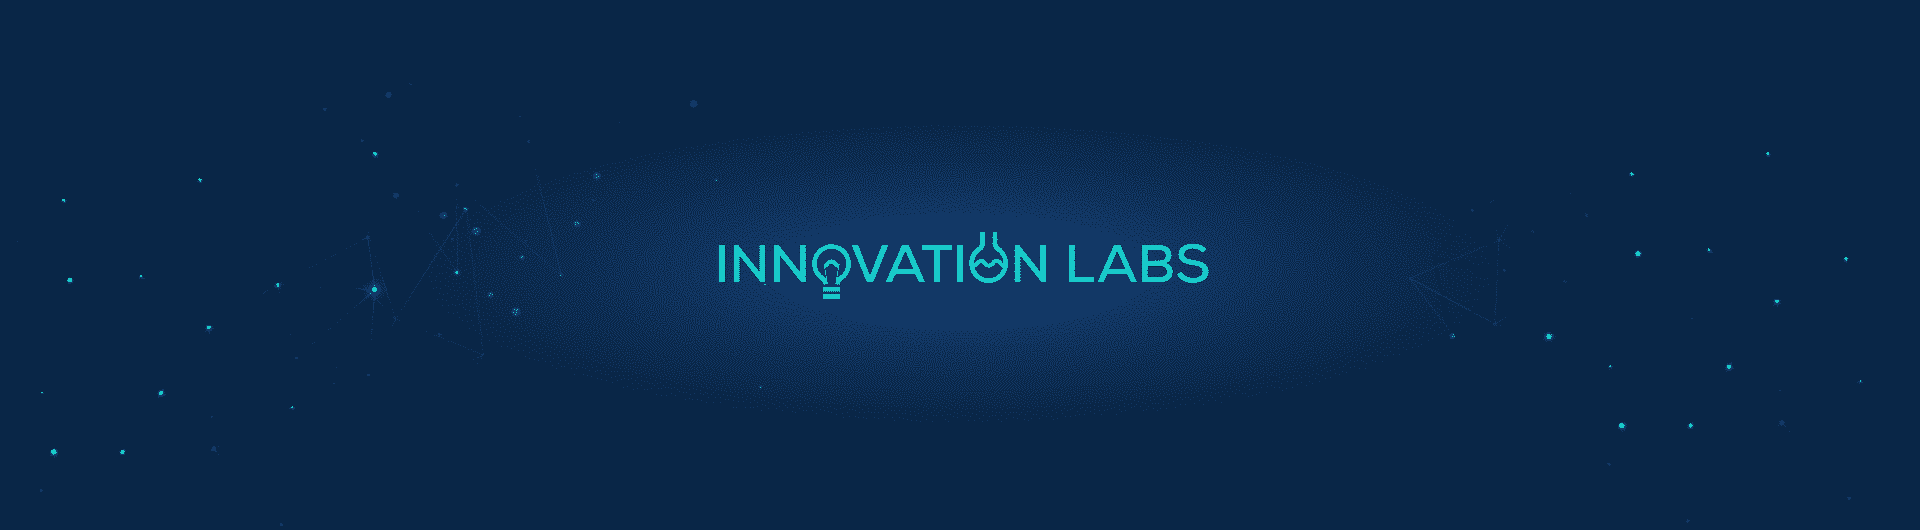 innovation labs